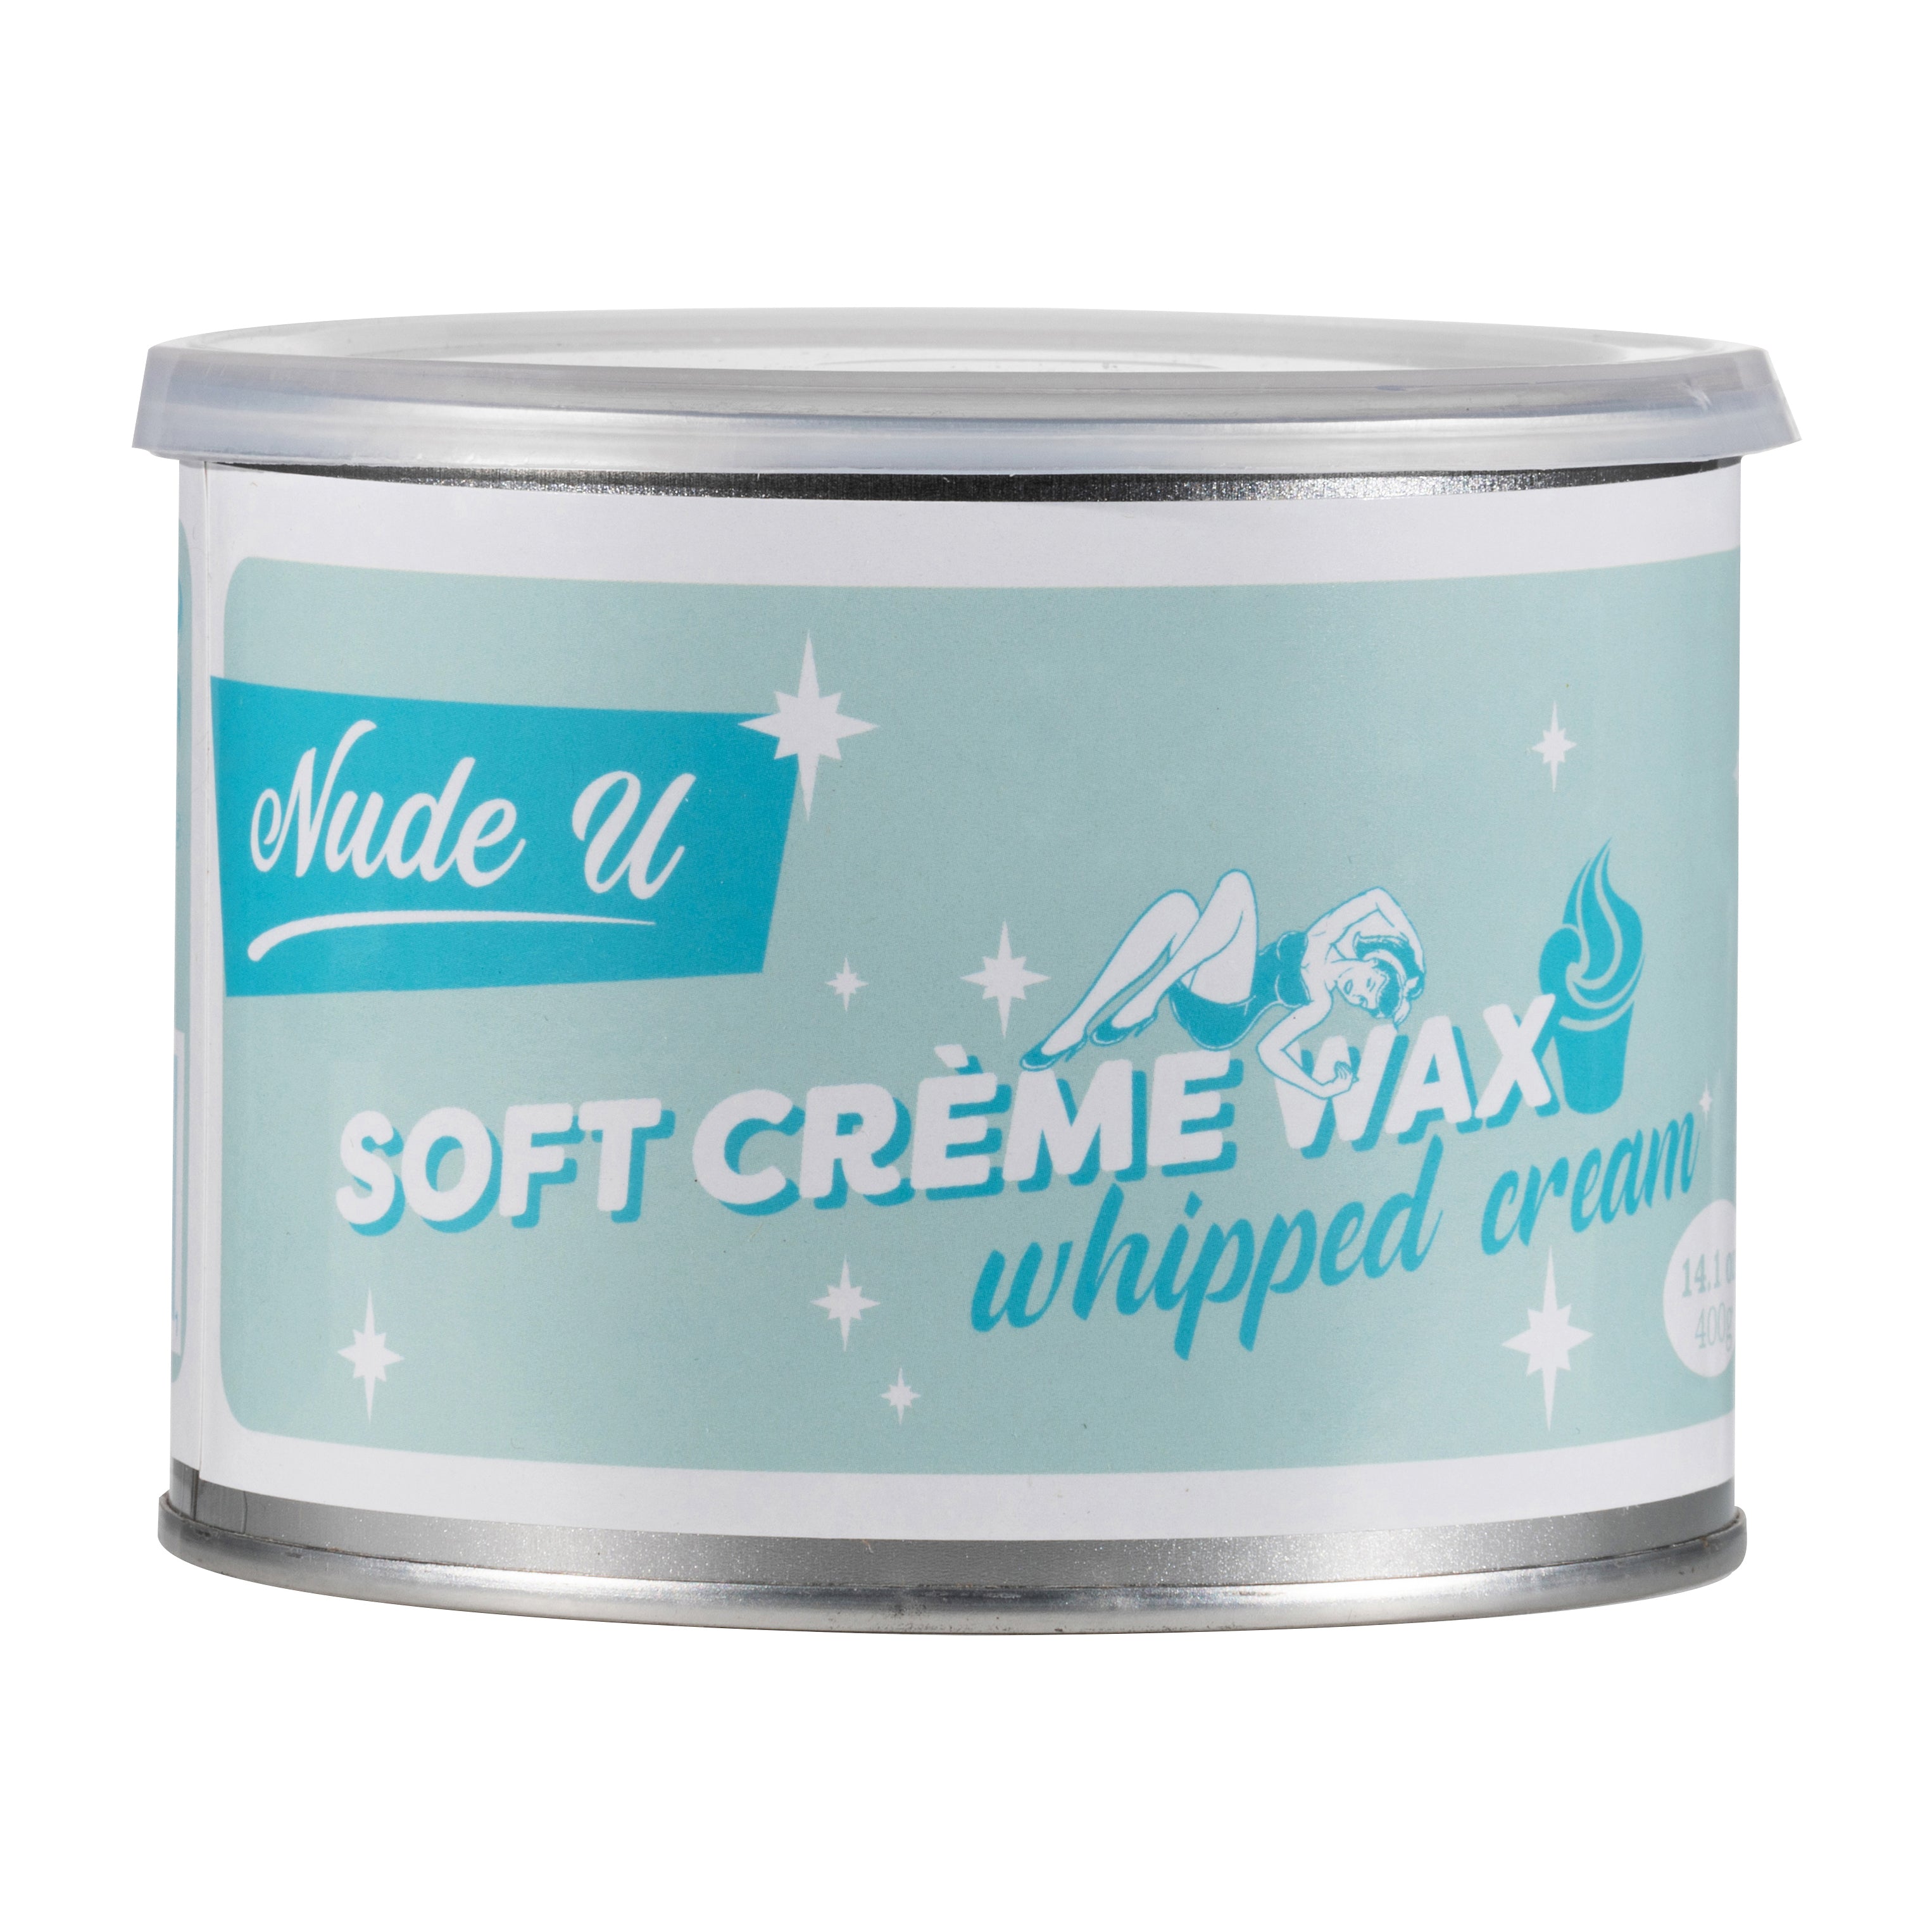 Whipped Cream Soft Creme